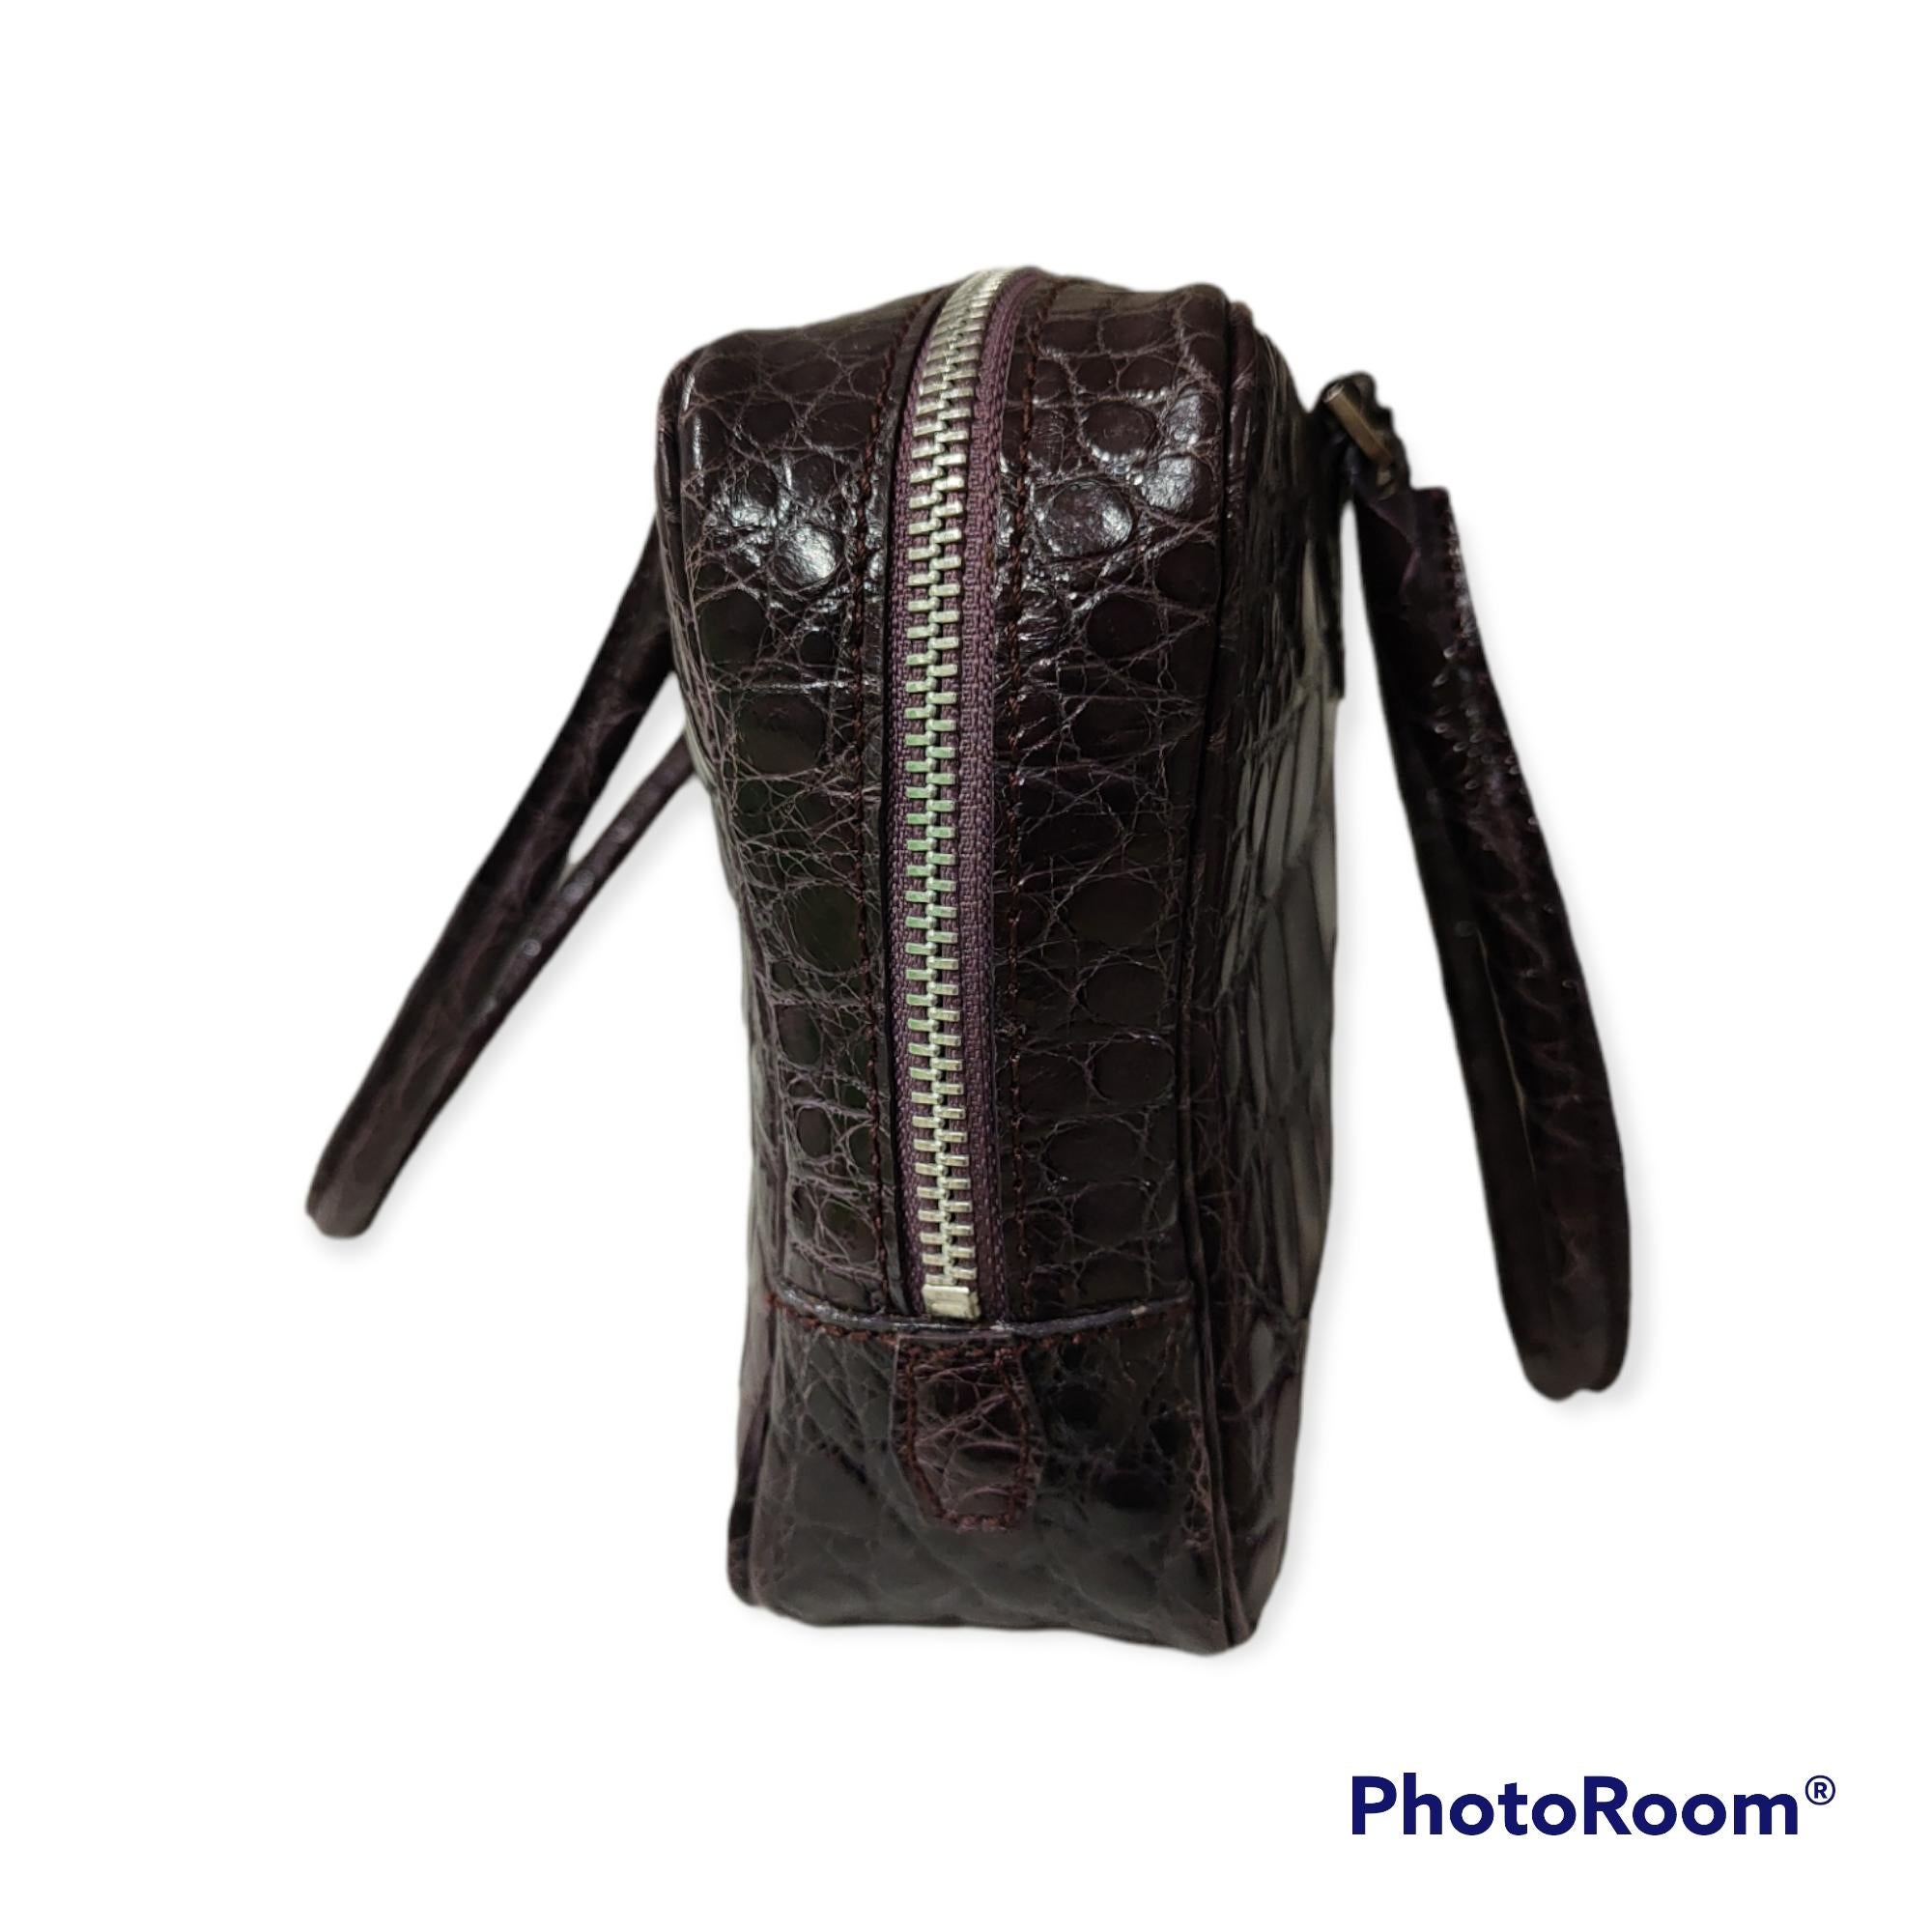 Sirni purple crocodile handbag
totally made in italy
lining in leather
measurements: 28*15 cm, 7 cm depth